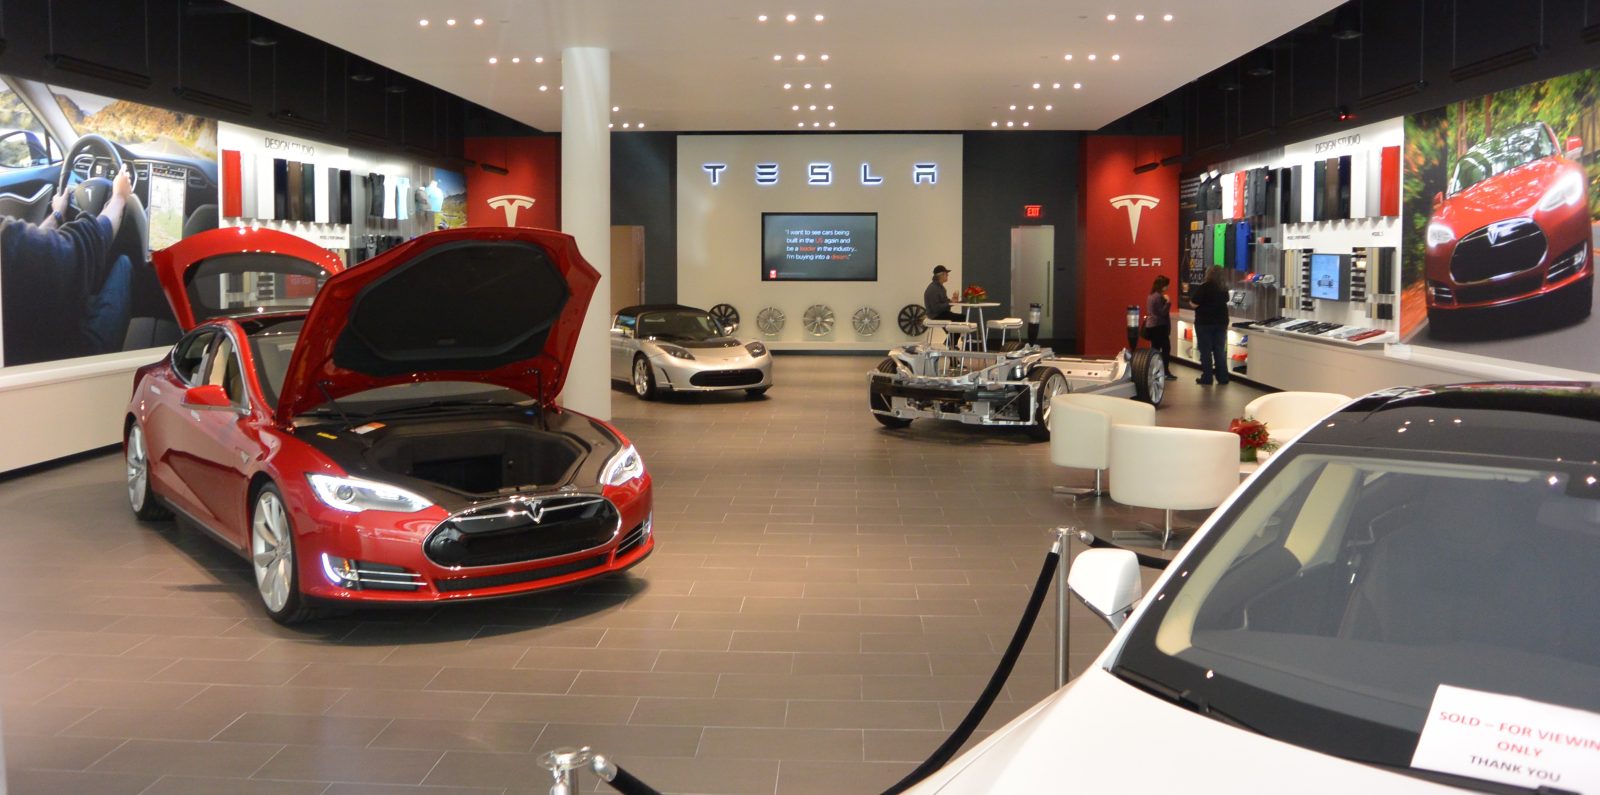 Tesla opens a showroom in Galleria Dallas as Texas laws remain